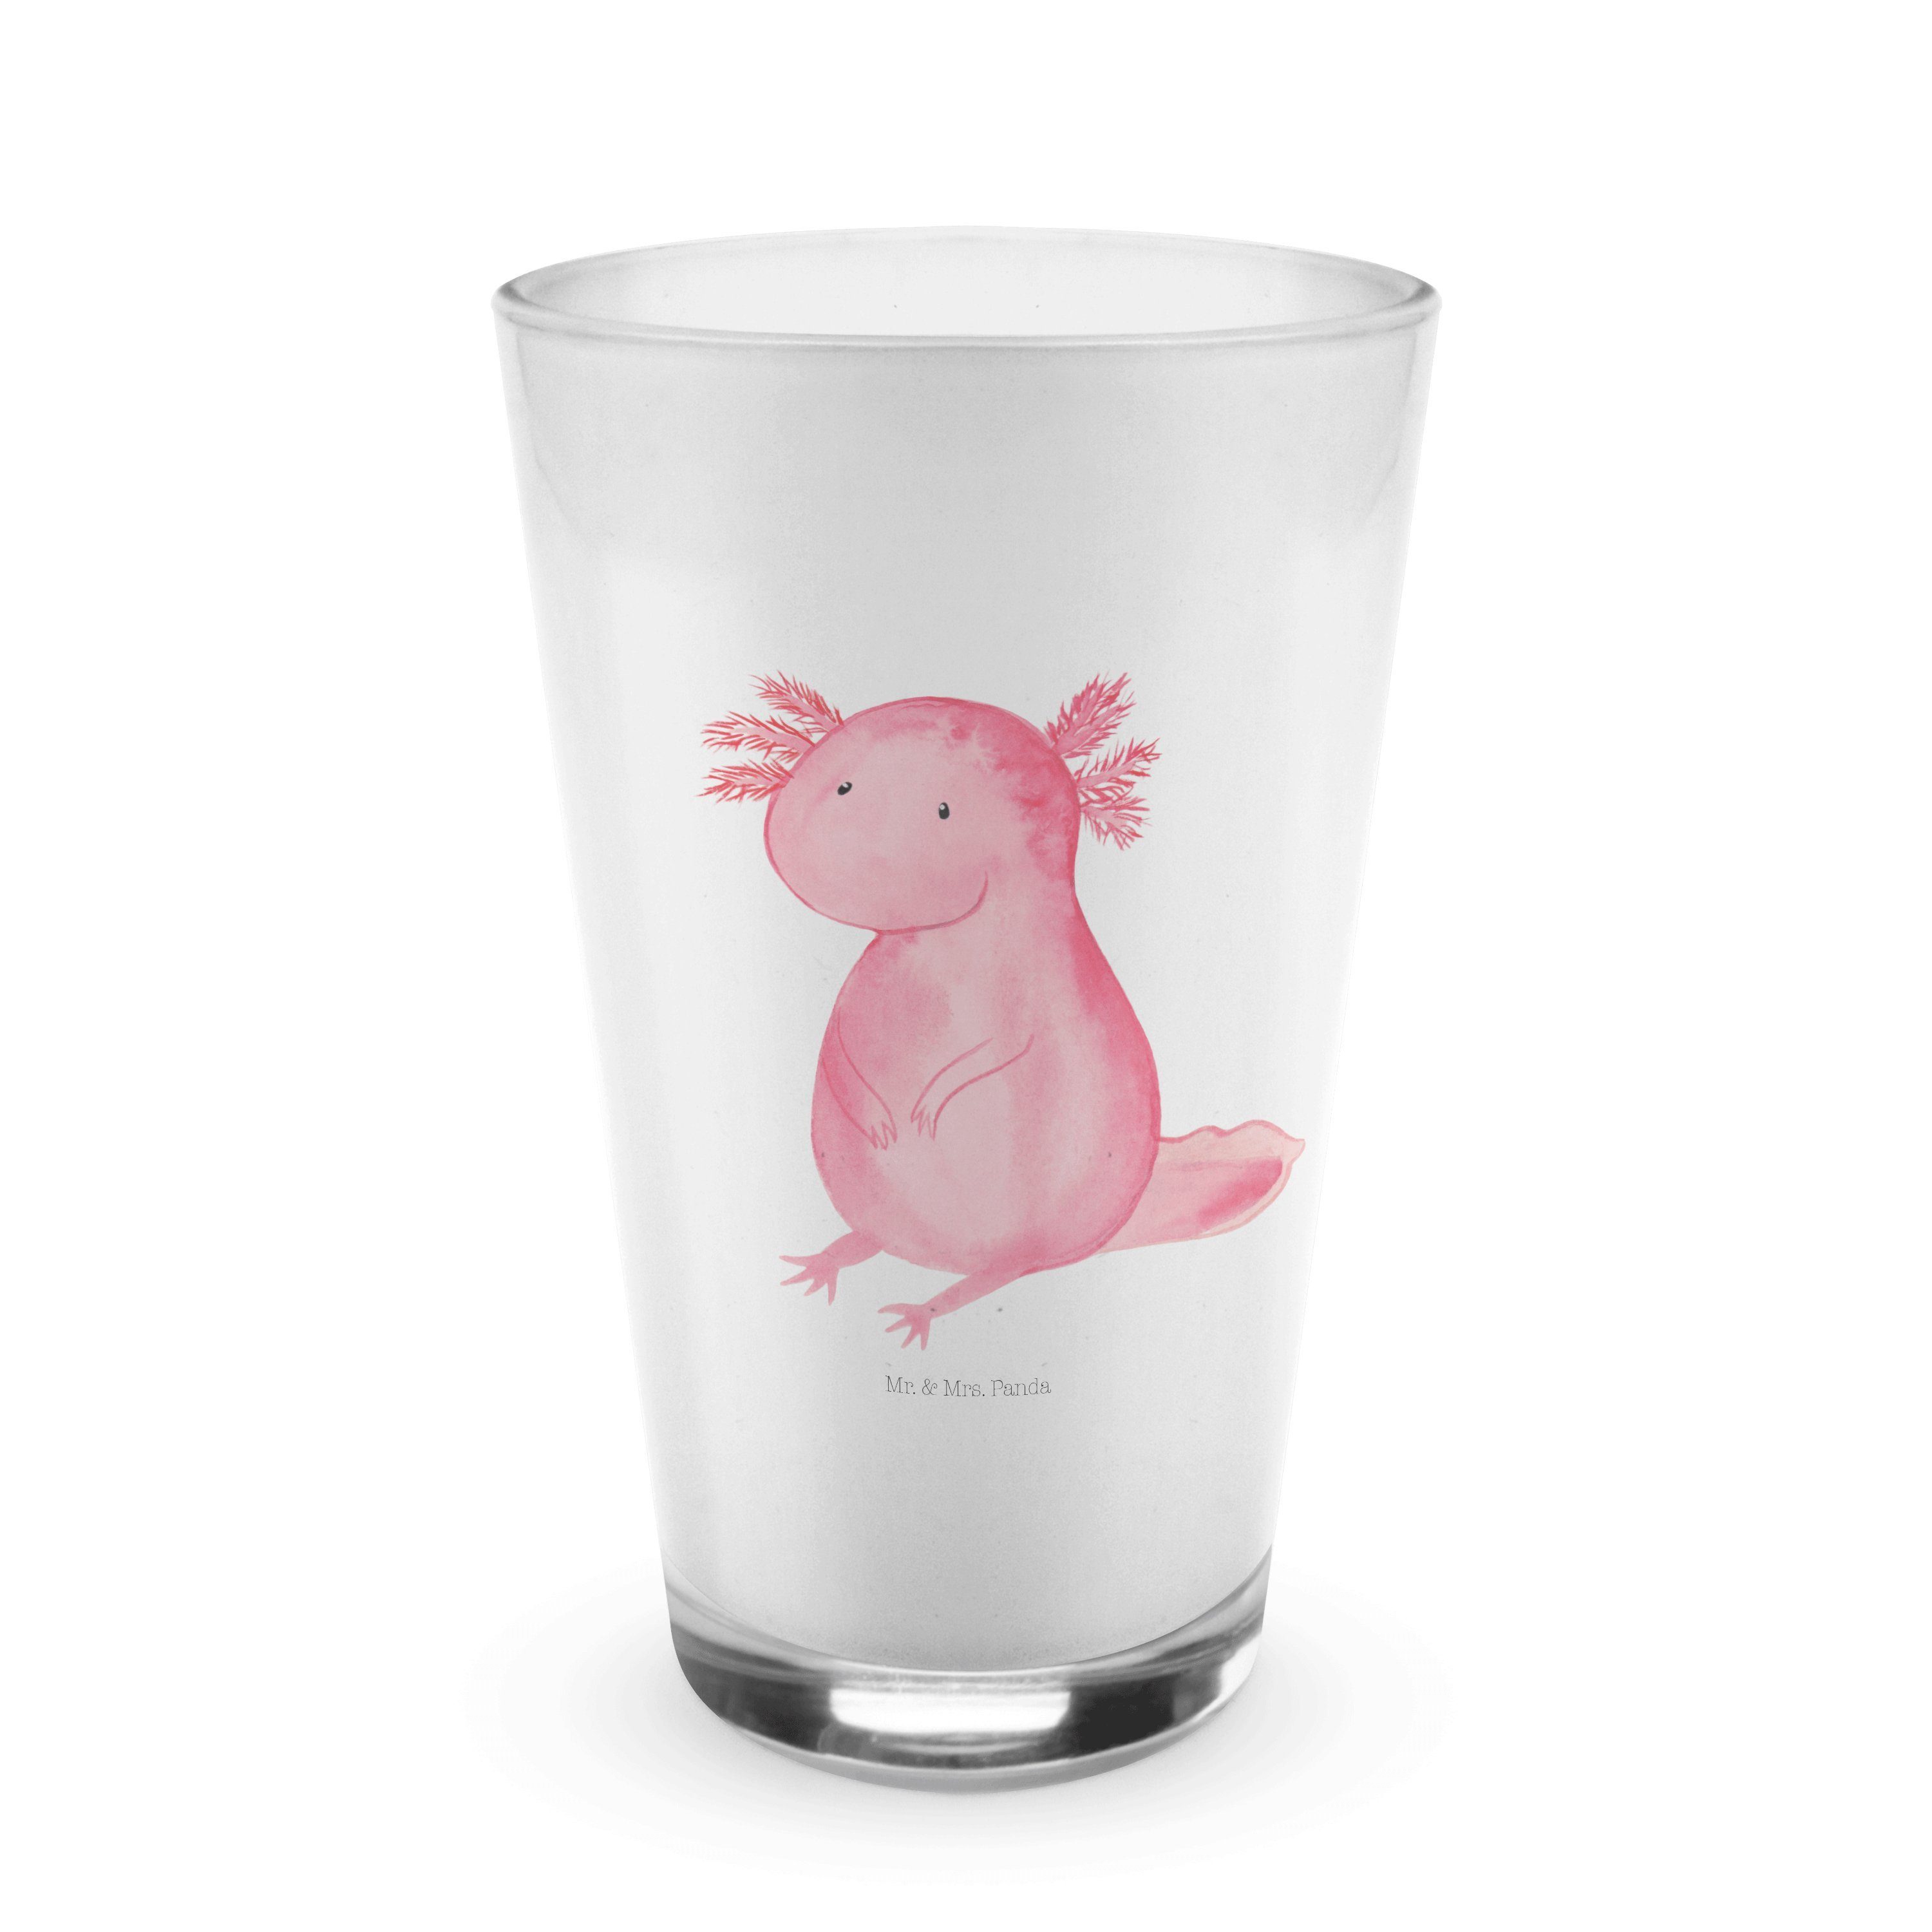 Mr. & Mrs. Panda Glas - Lebensstil, Axolotl Geschenk, Premium Transparent Glas Lebensweisheit, - Molch